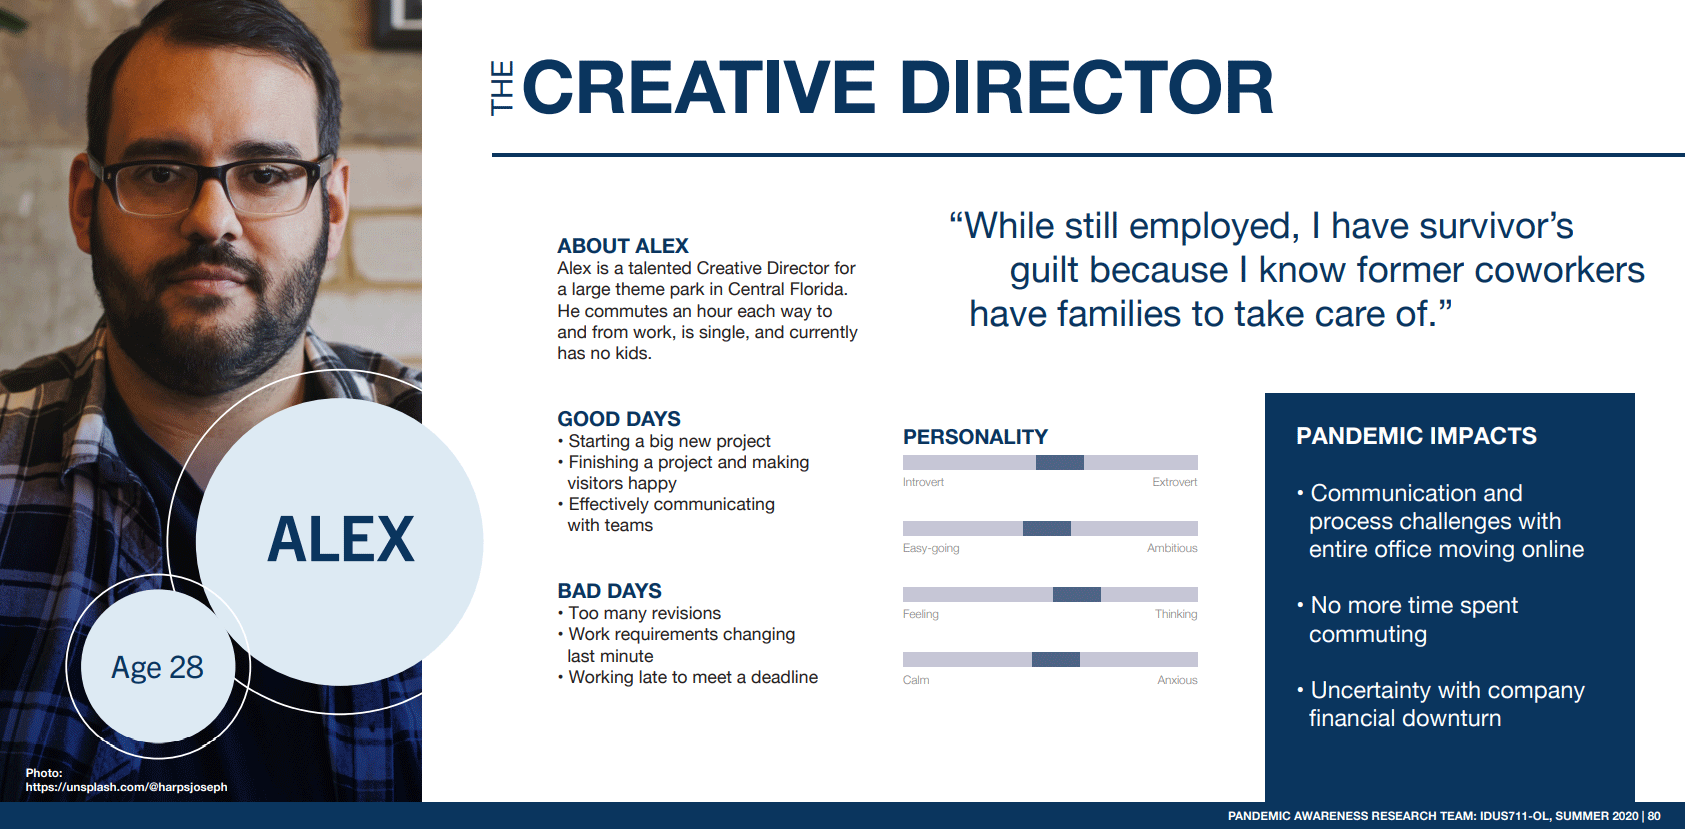 The Creative Director